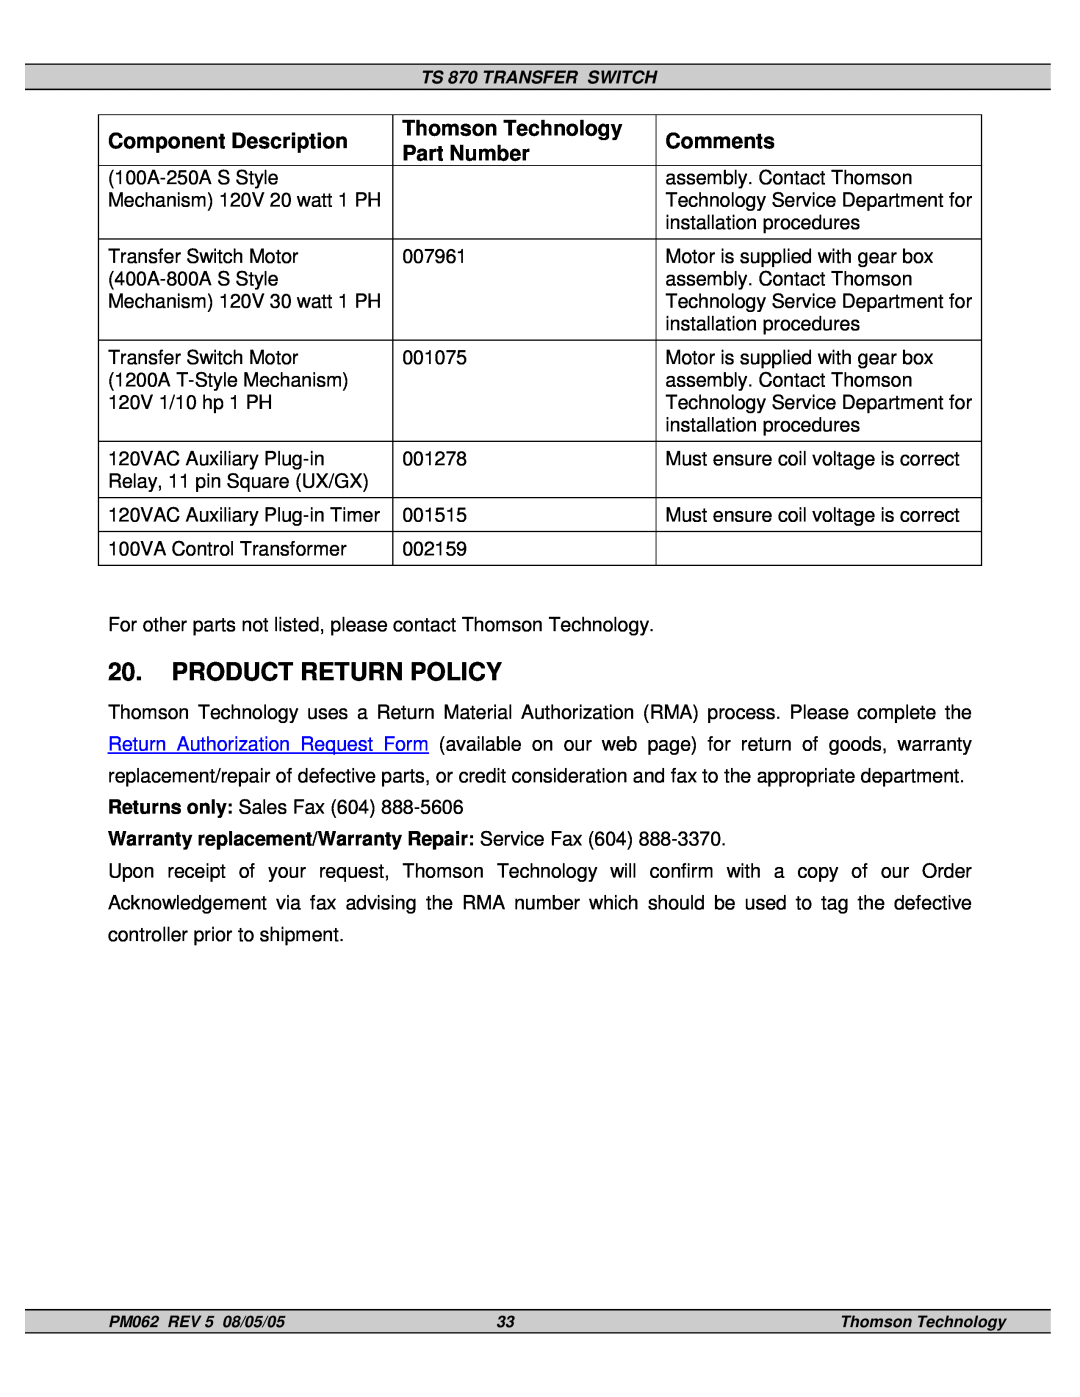 Technicolor - Thomson TS 870 Product Return Policy, Component Description, Thomson Technology, Comments, Part Number 